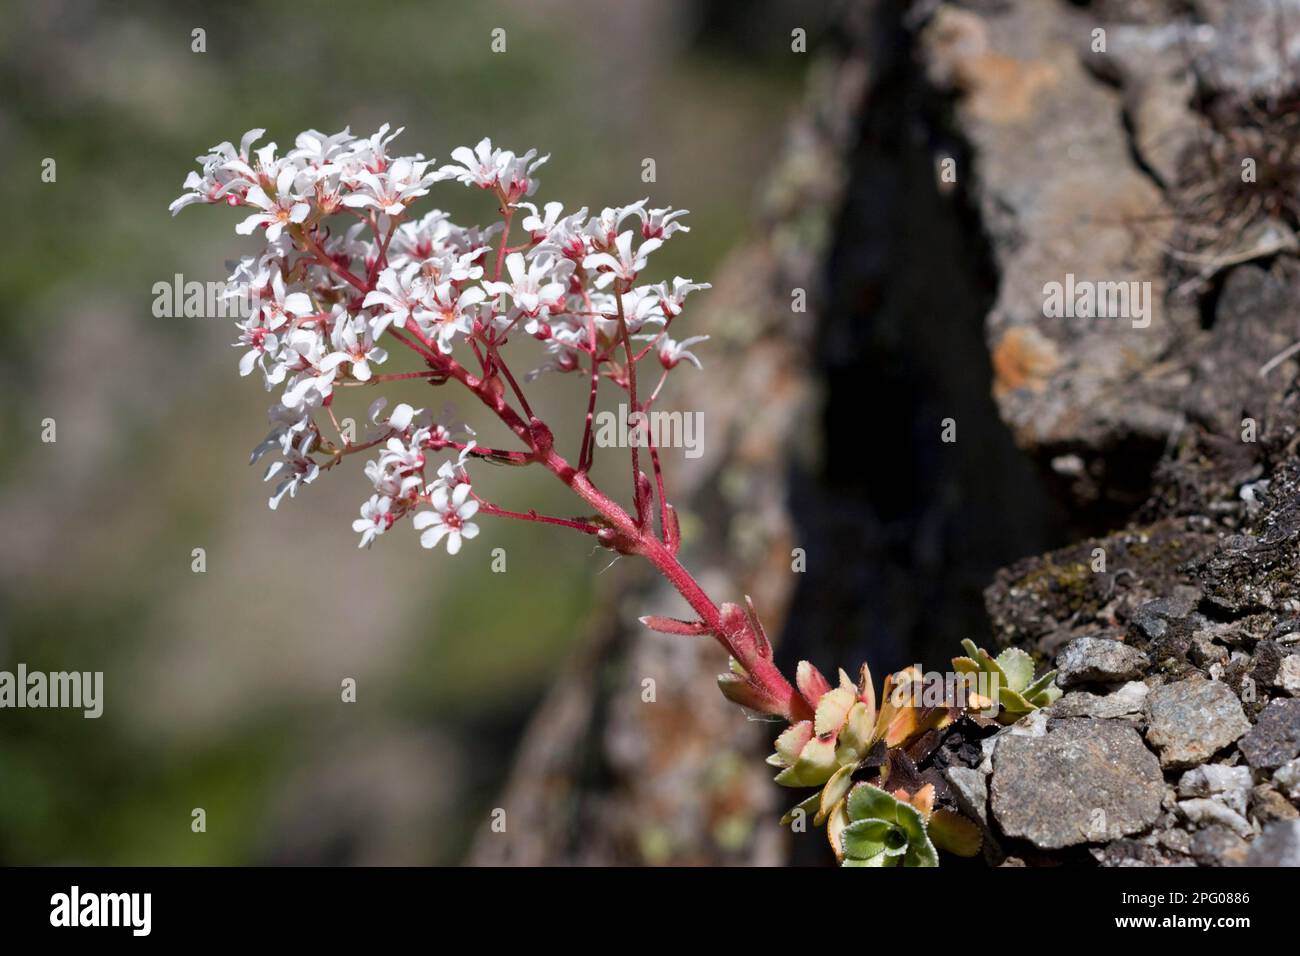 aizoon, Chondrosea aizoon, Saxifrage (Saxifraga), Saxifraga paniculata, Saxifrage family, Livelong Saxifrage flowering, growing on rocky slope Stock Photo